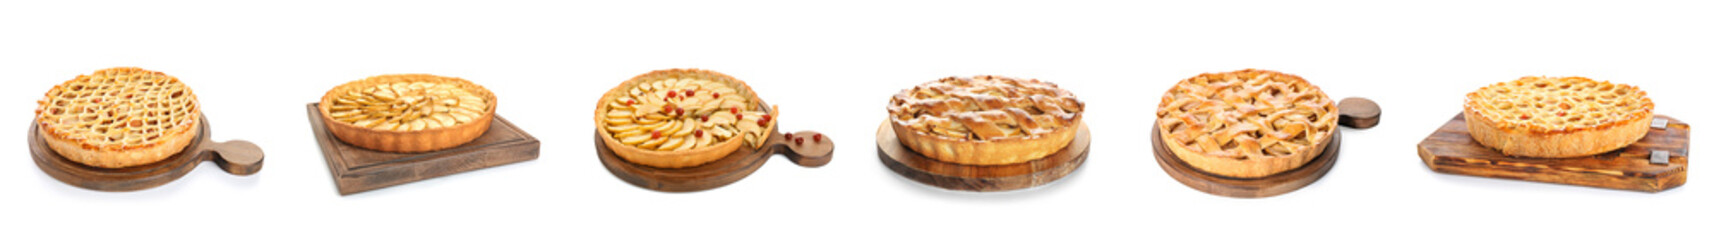 Set of tasty apple pies on white background